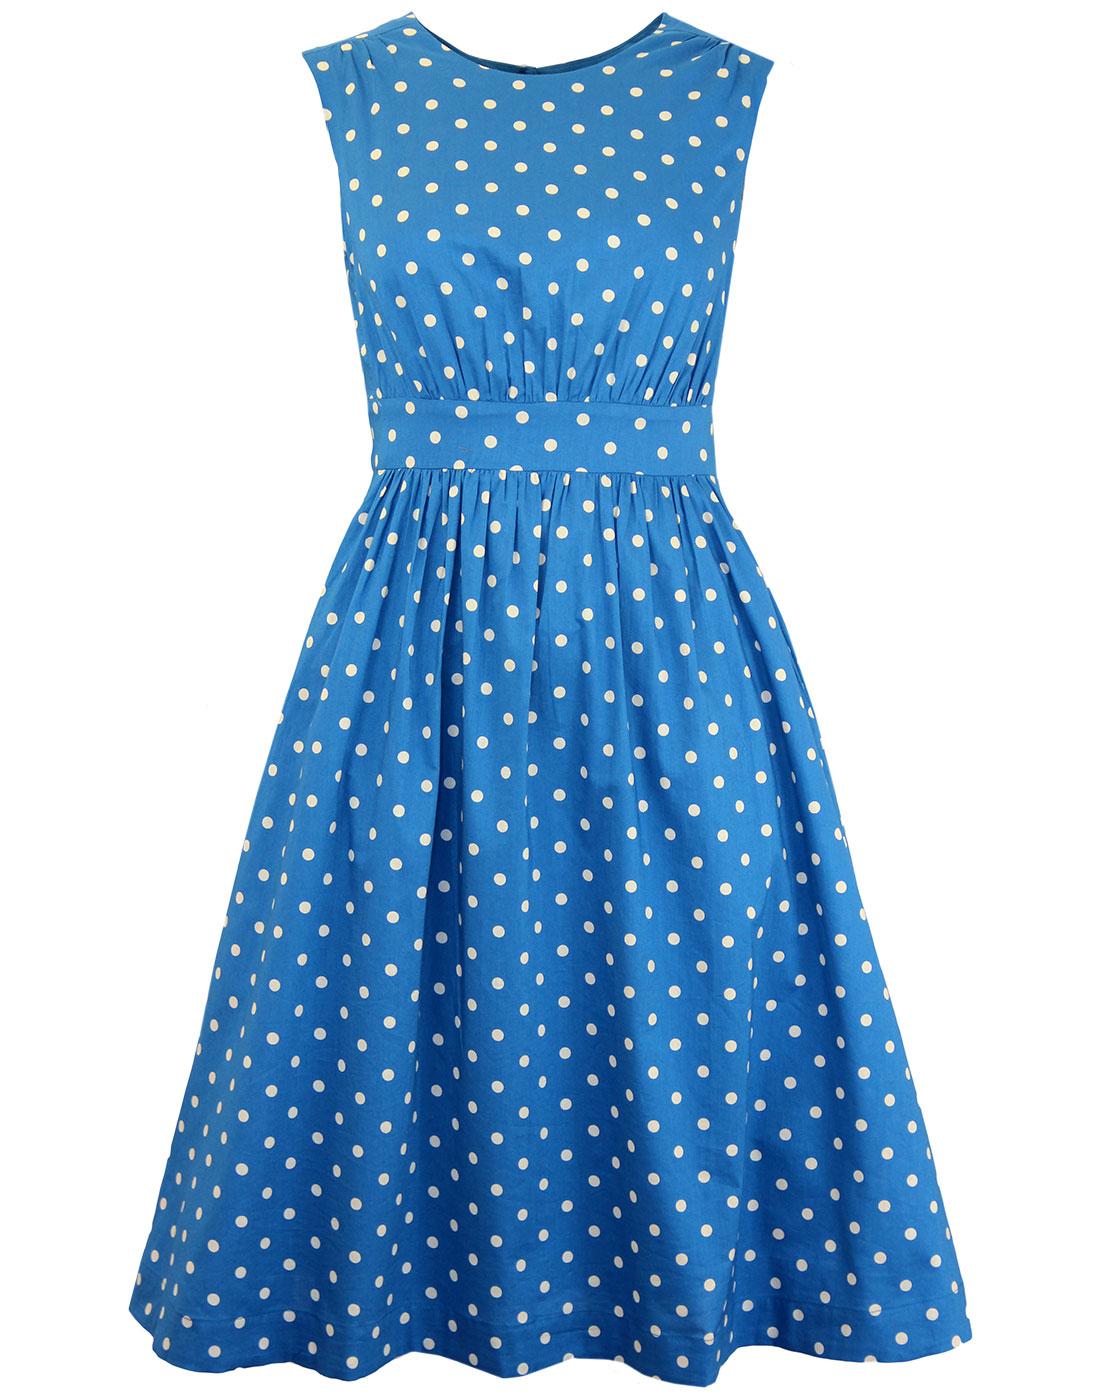 Lucy Polka Dot EMILY & FIN Retro Mod A-Line Dress